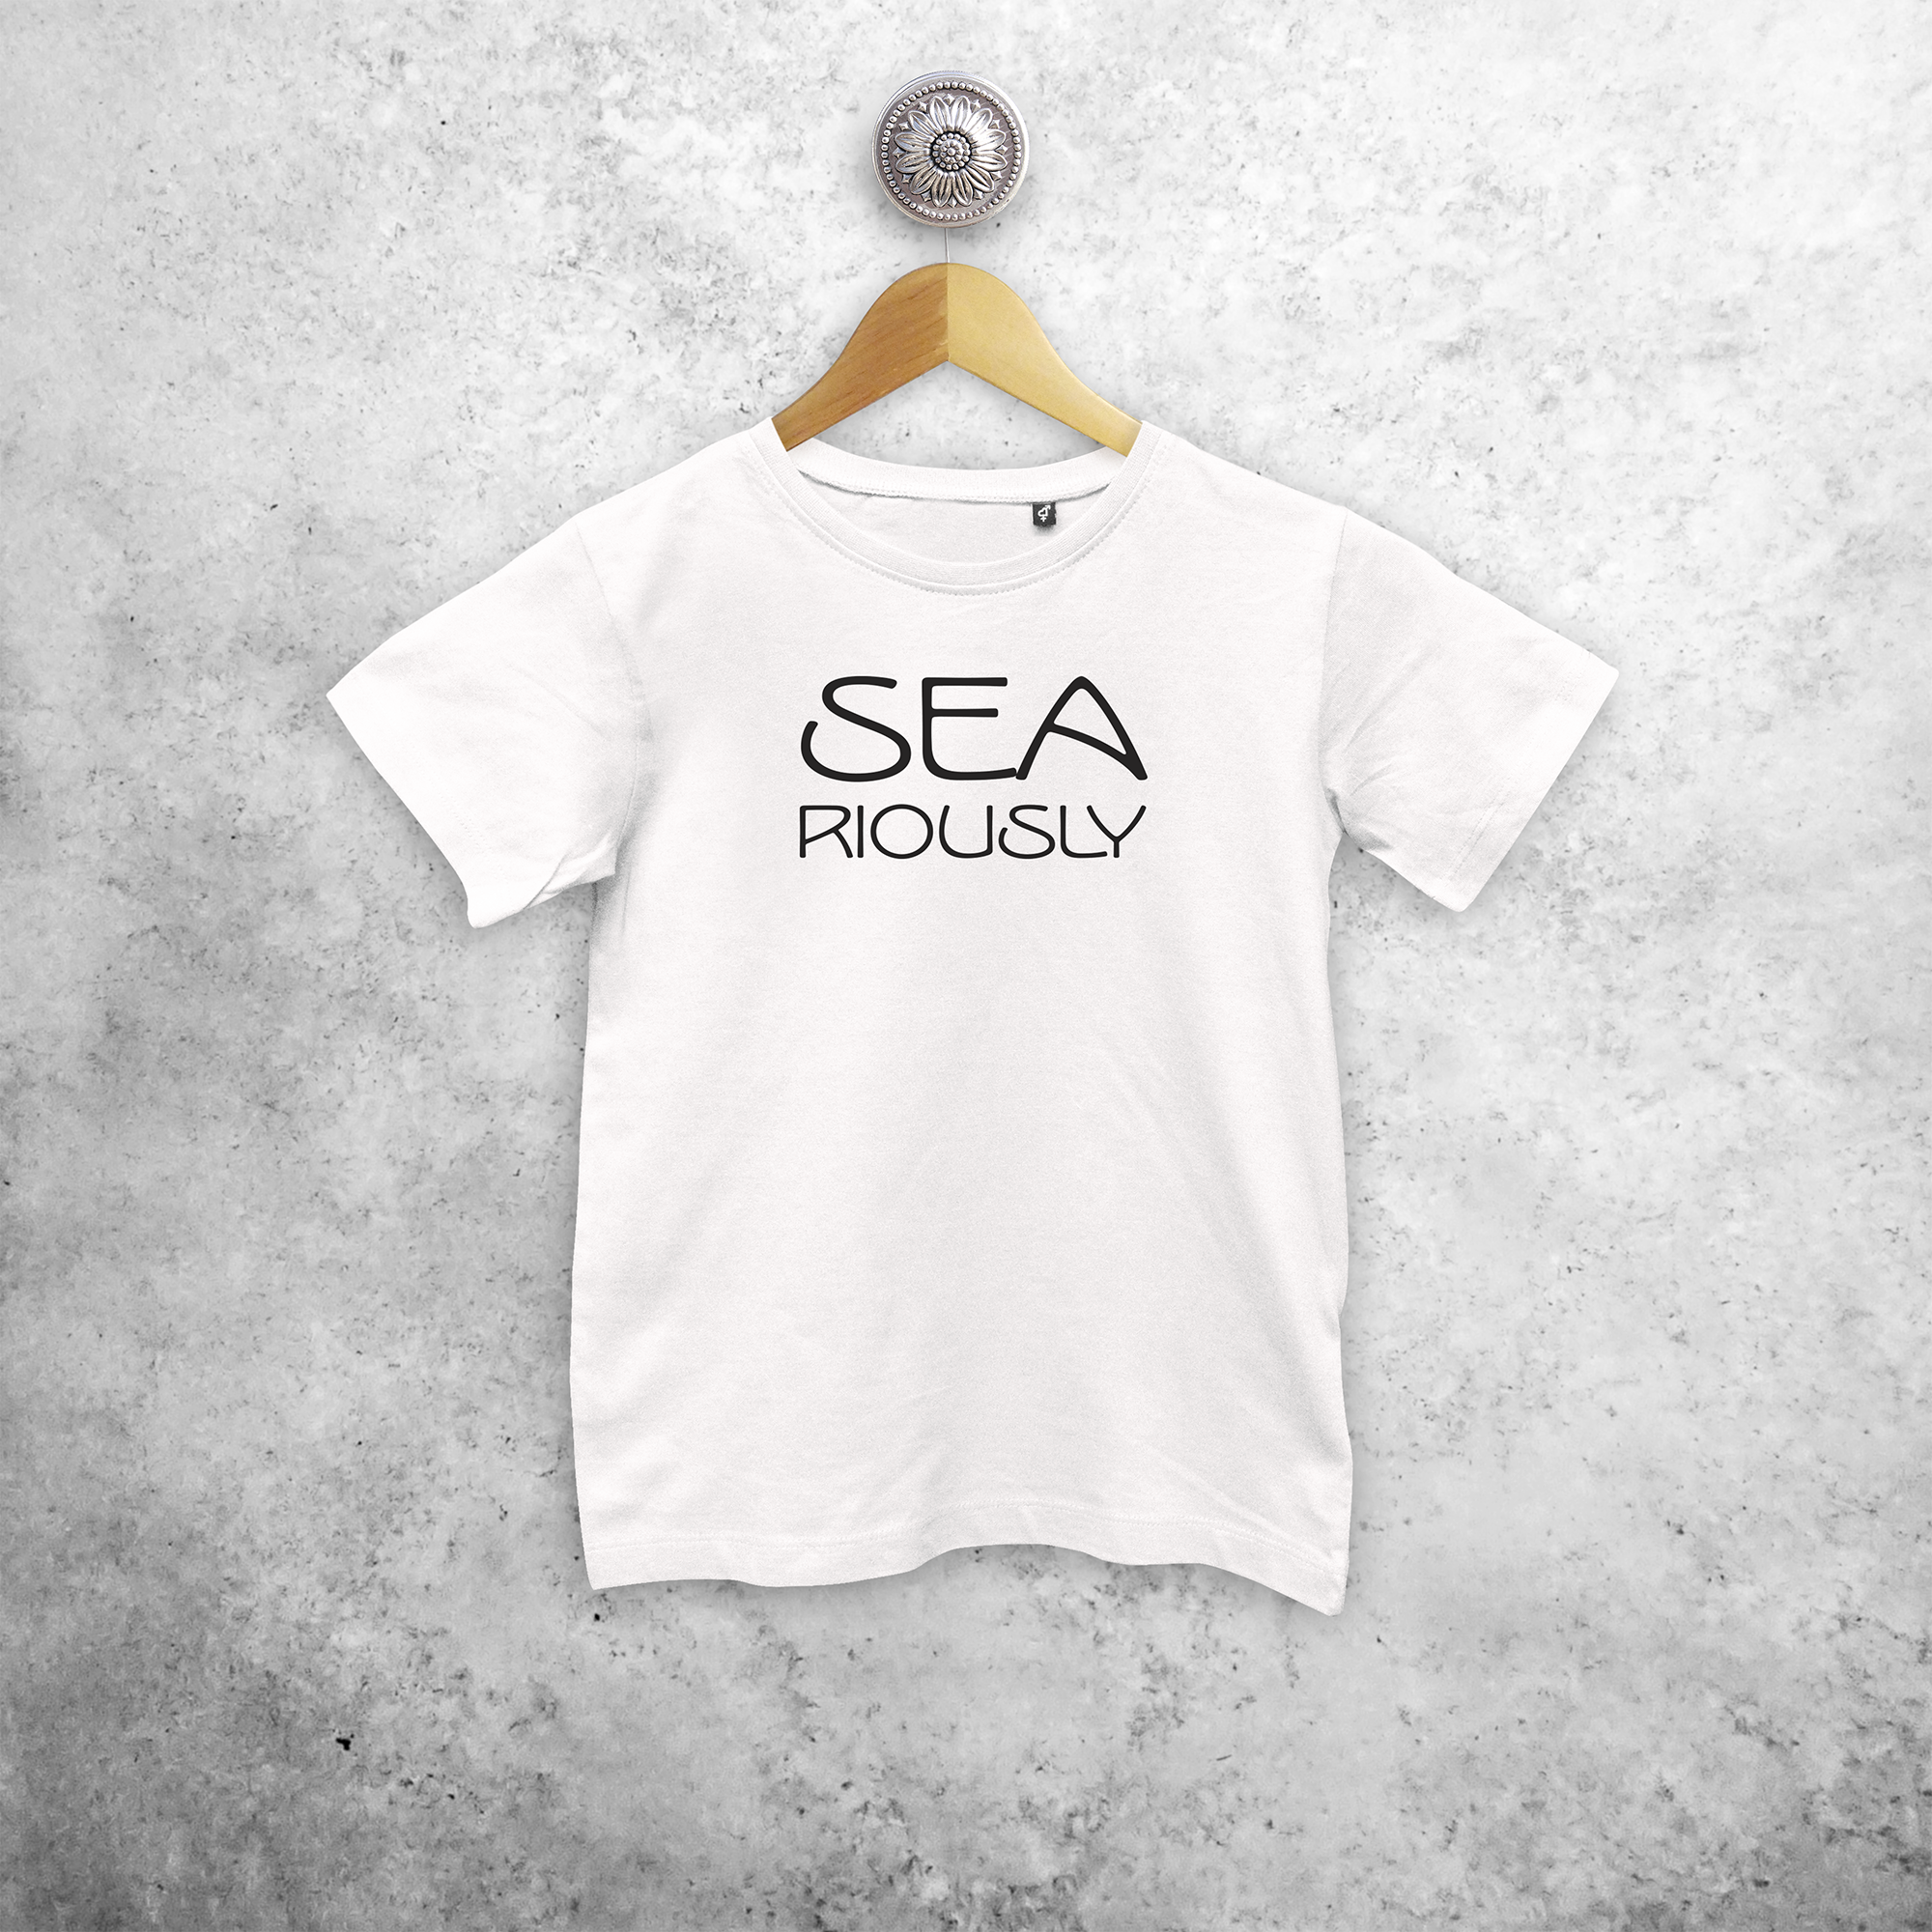 'Sea-riously' kids shortsleeve shirt